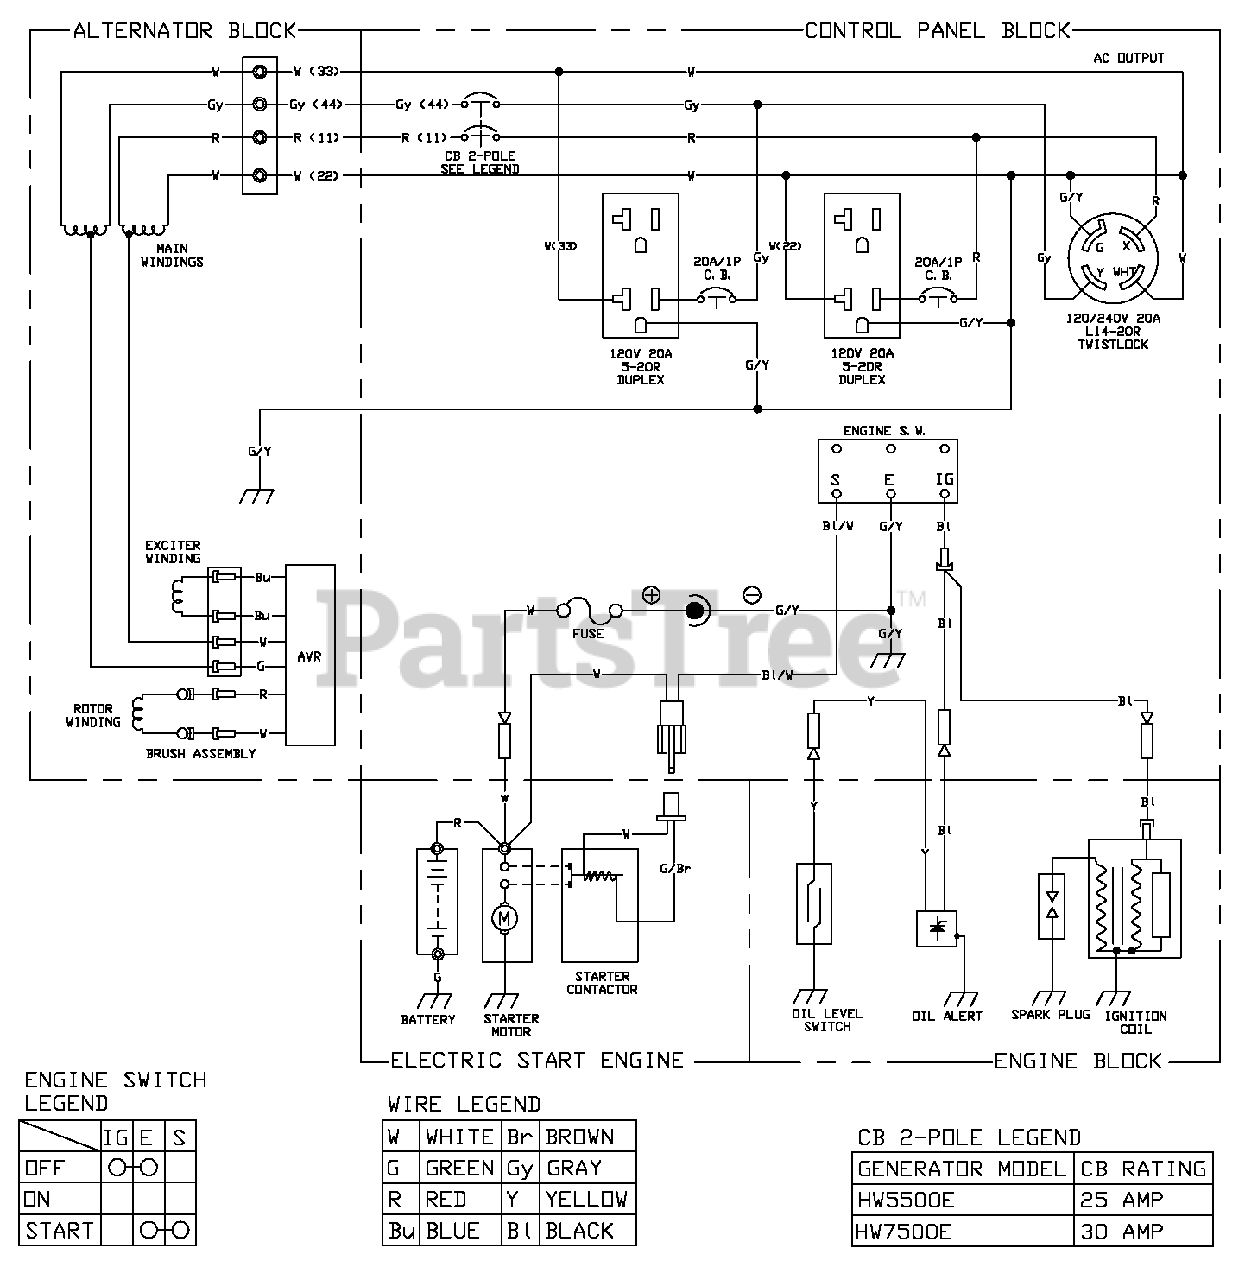 Wiring Diagram Parts Lookup